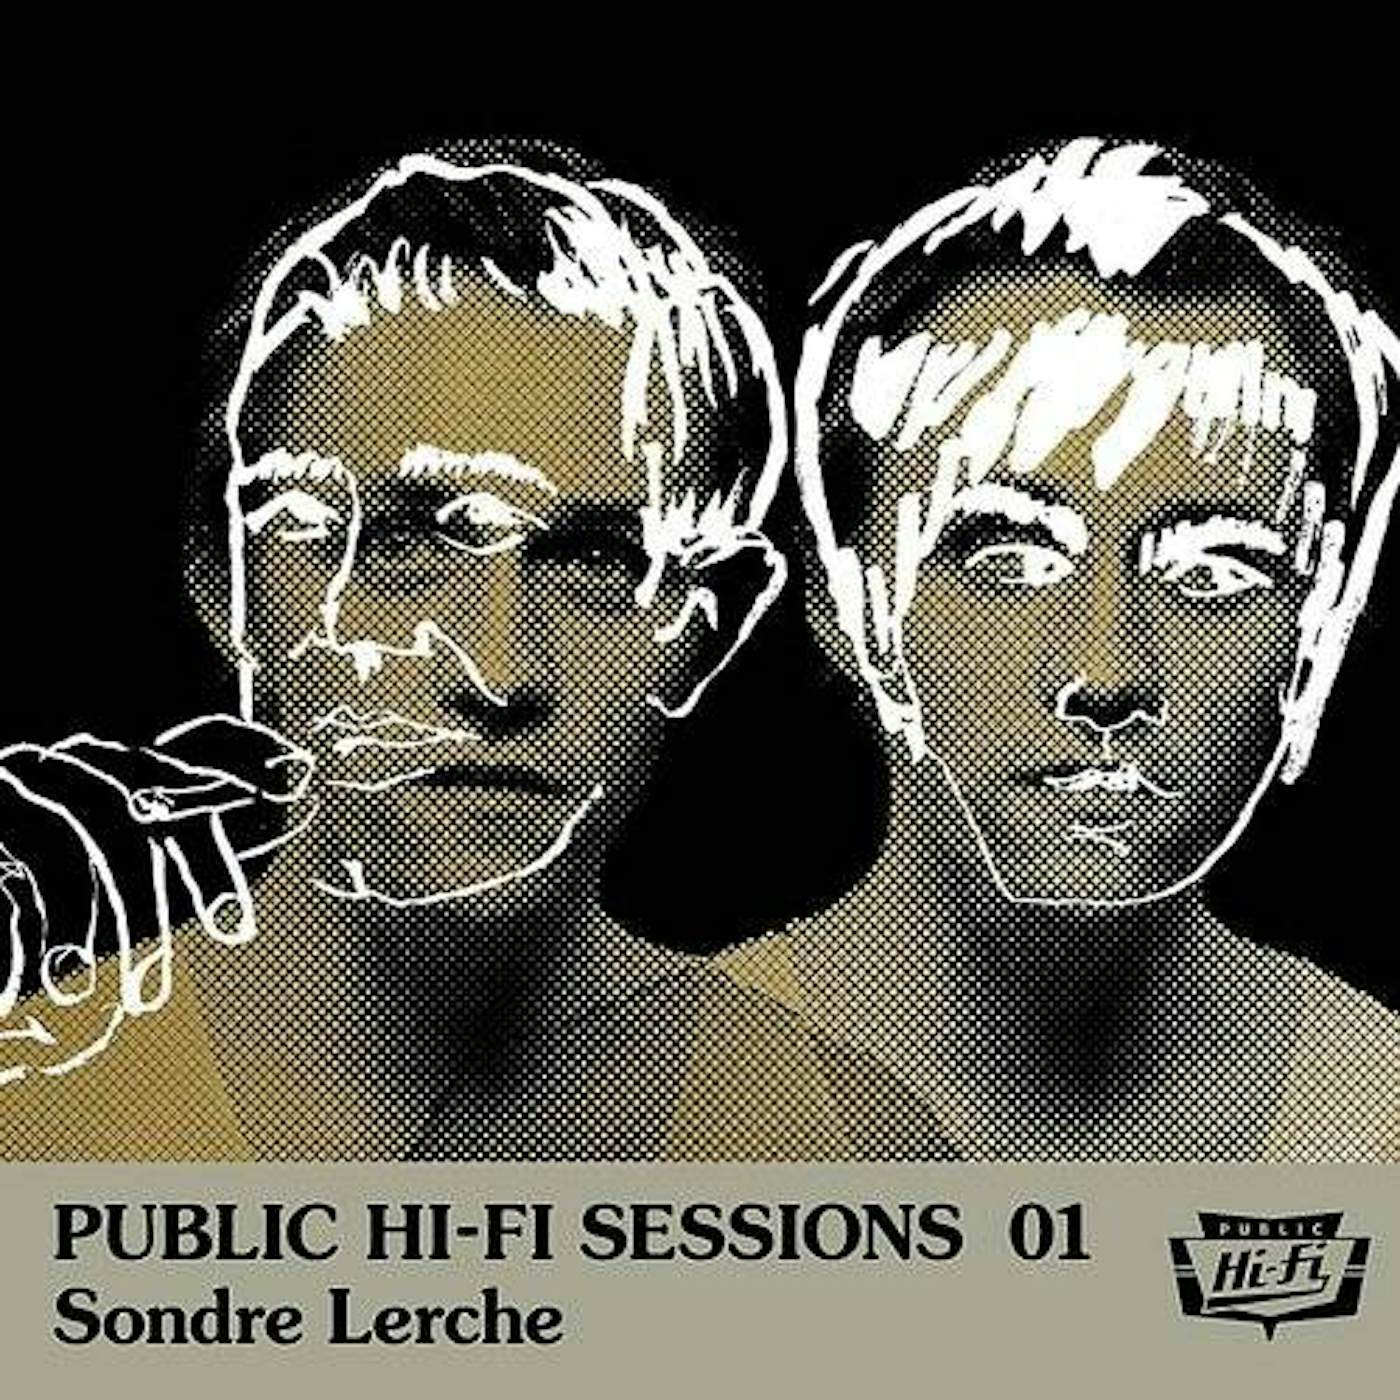 Sondre Lerche PUBLIC HI-FI SESSIONS 01 (LTD) (Vinyl)